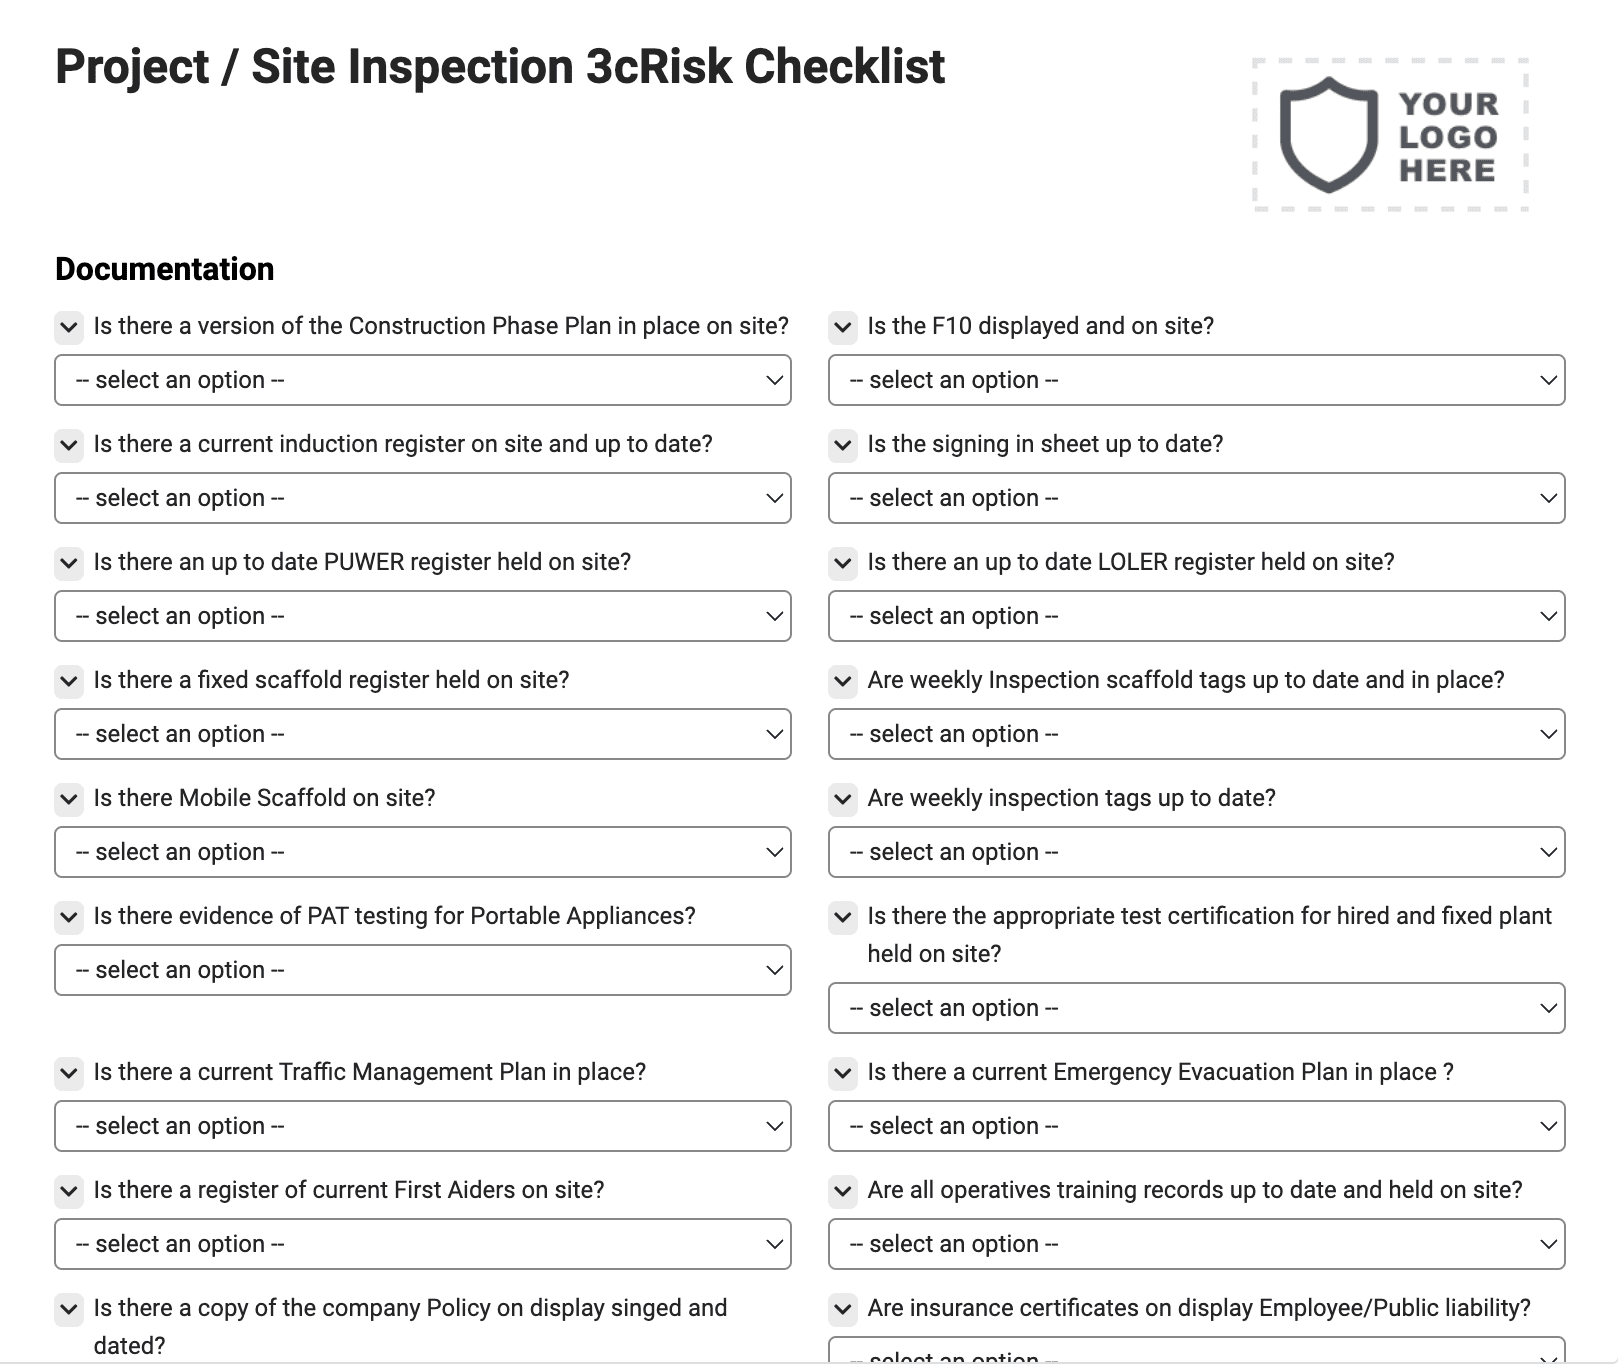 Project / Site Inspection 3cRisk Checklist